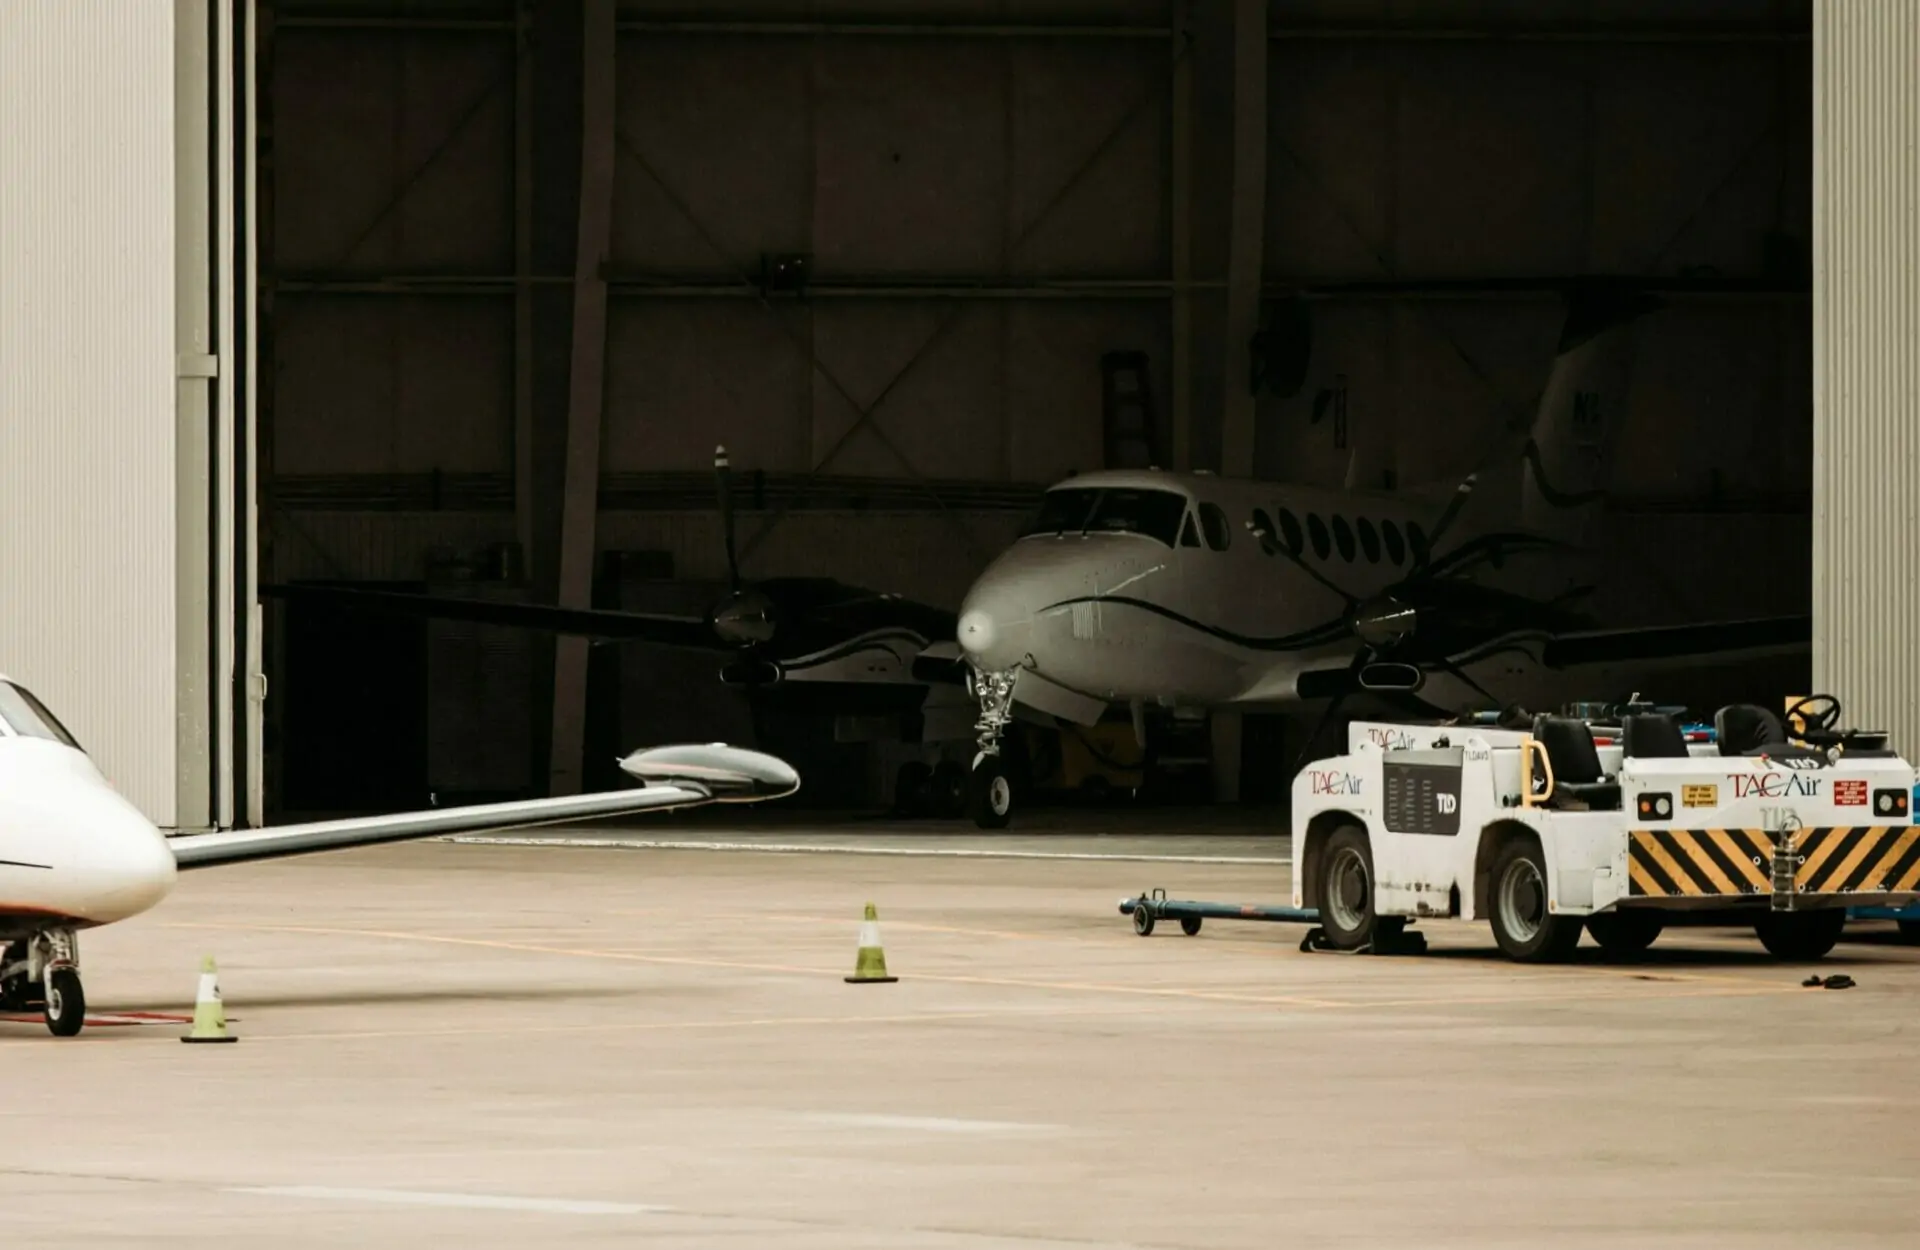 Private jet storage in hangar